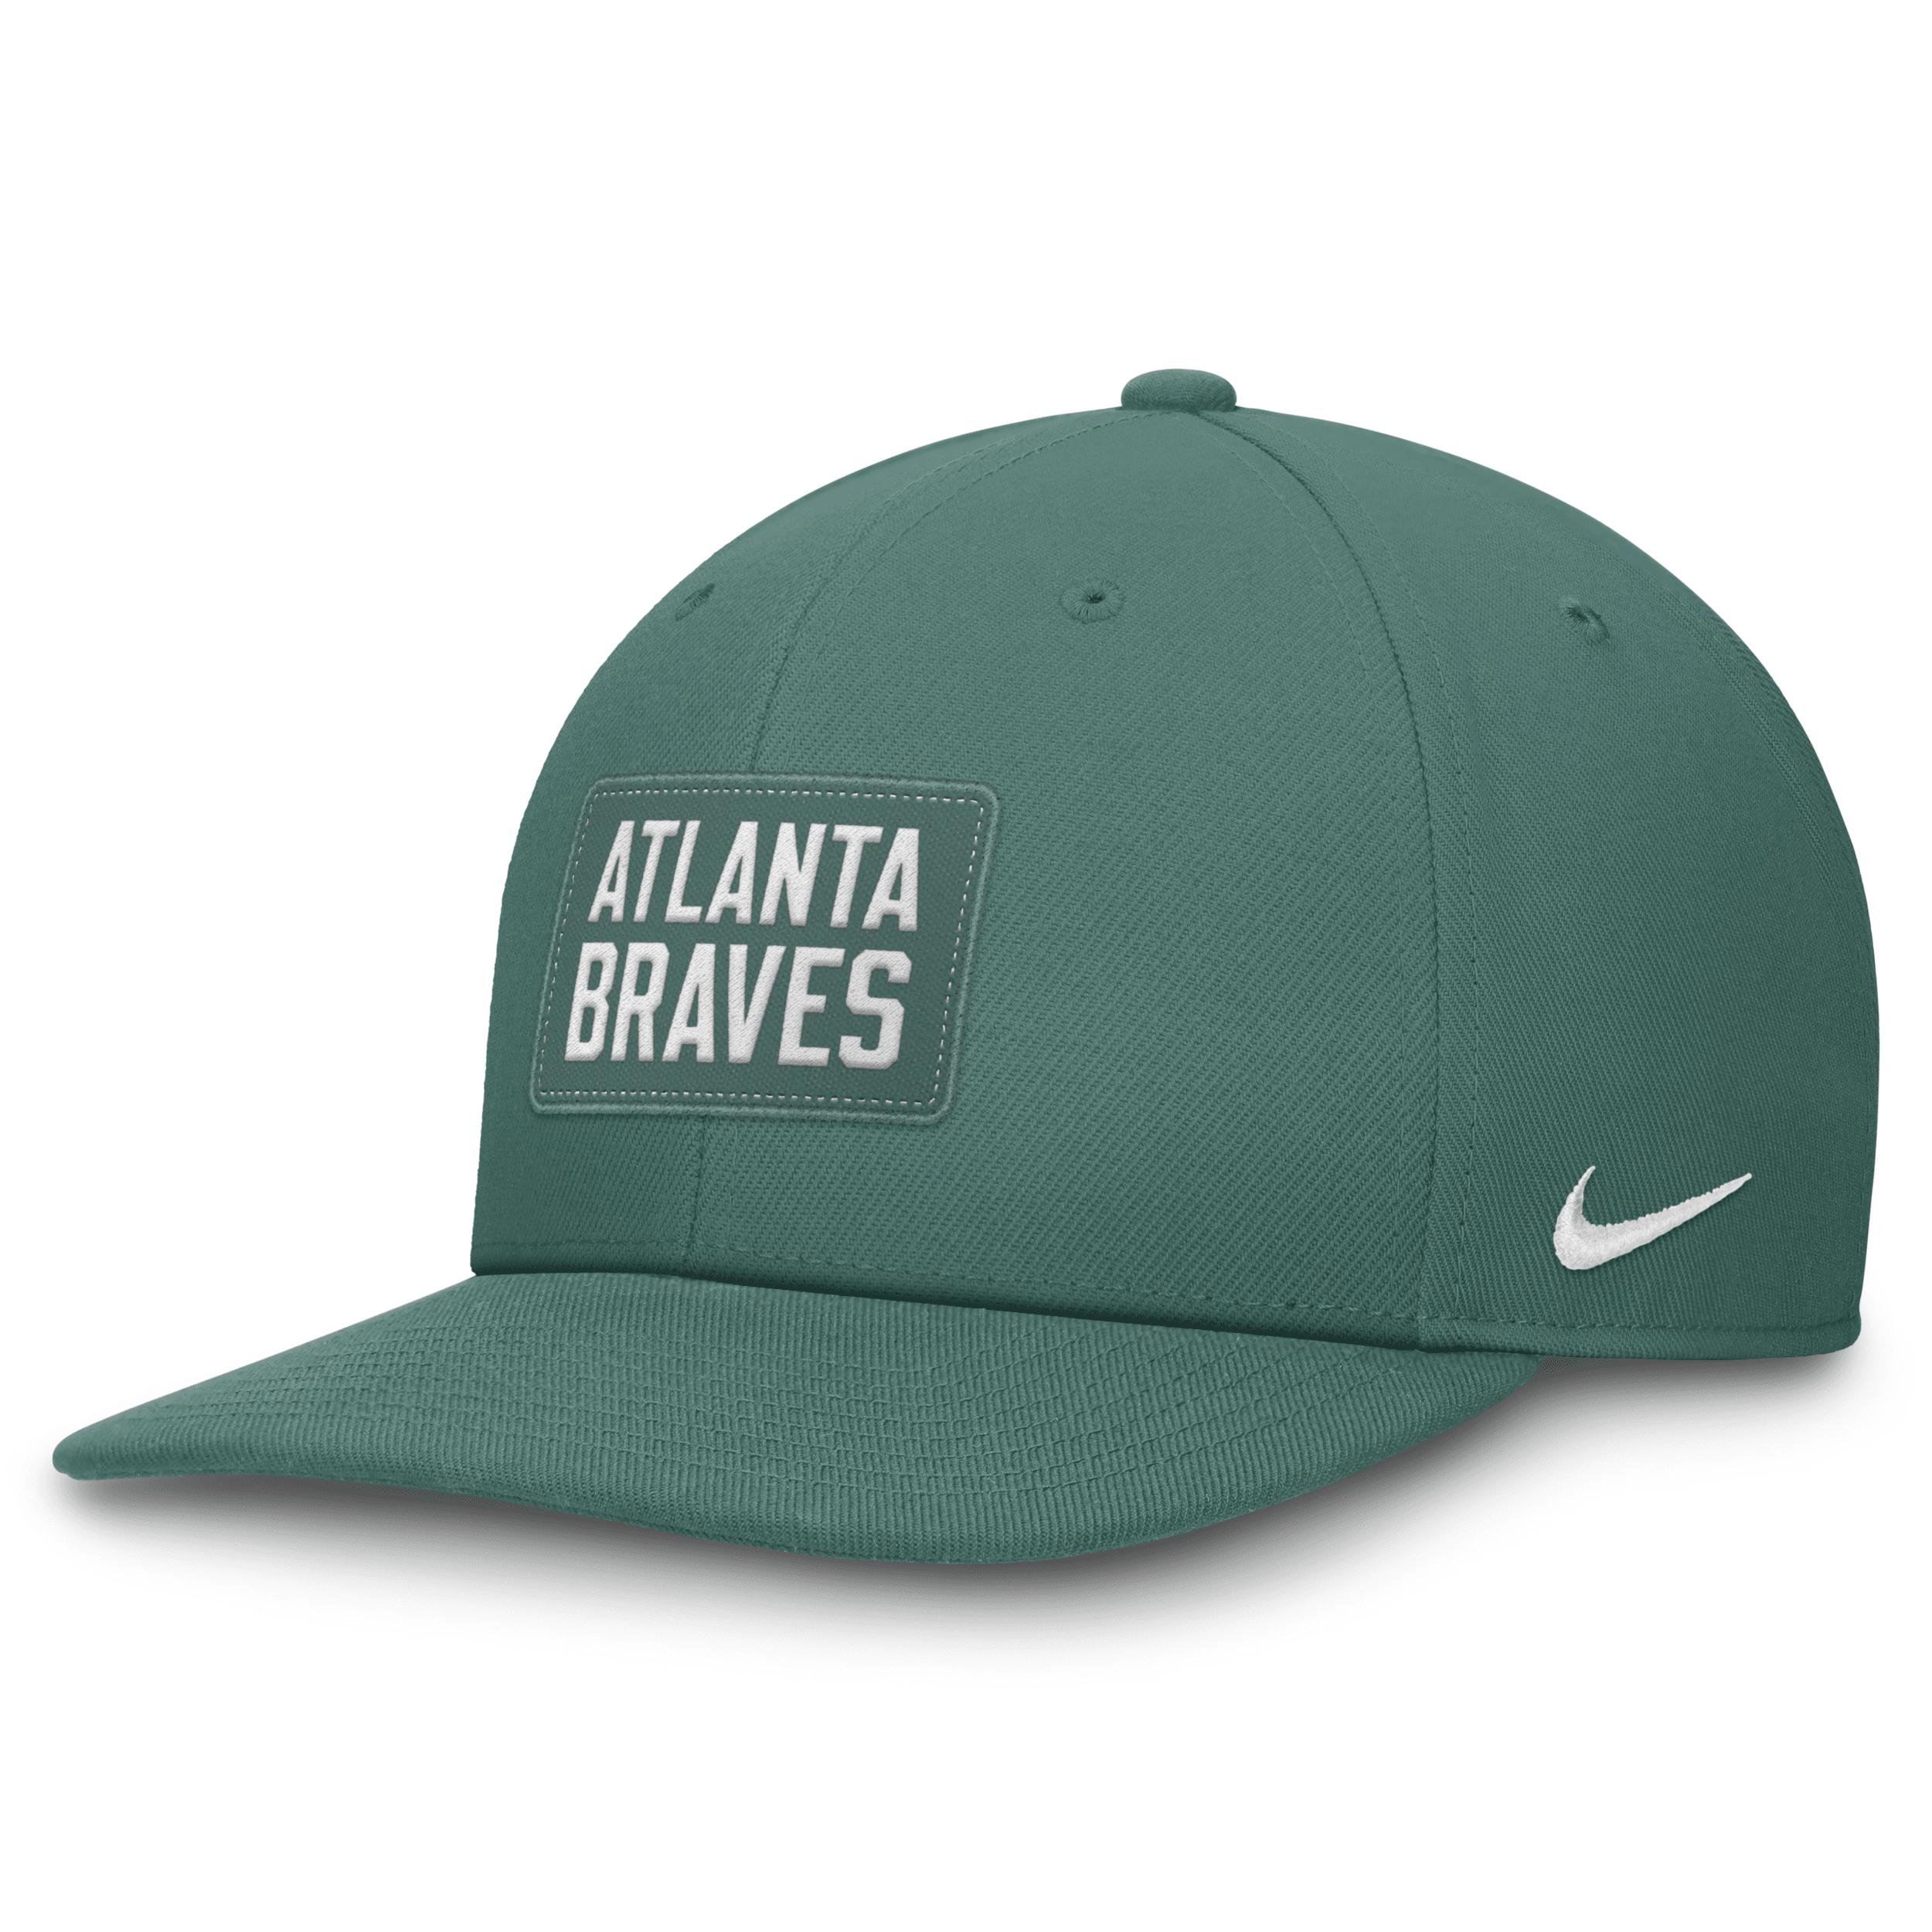 Atlanta Braves Bicoastal Pro Nike Unisex Dri-FIT MLB Adjustable Hat by NIKE